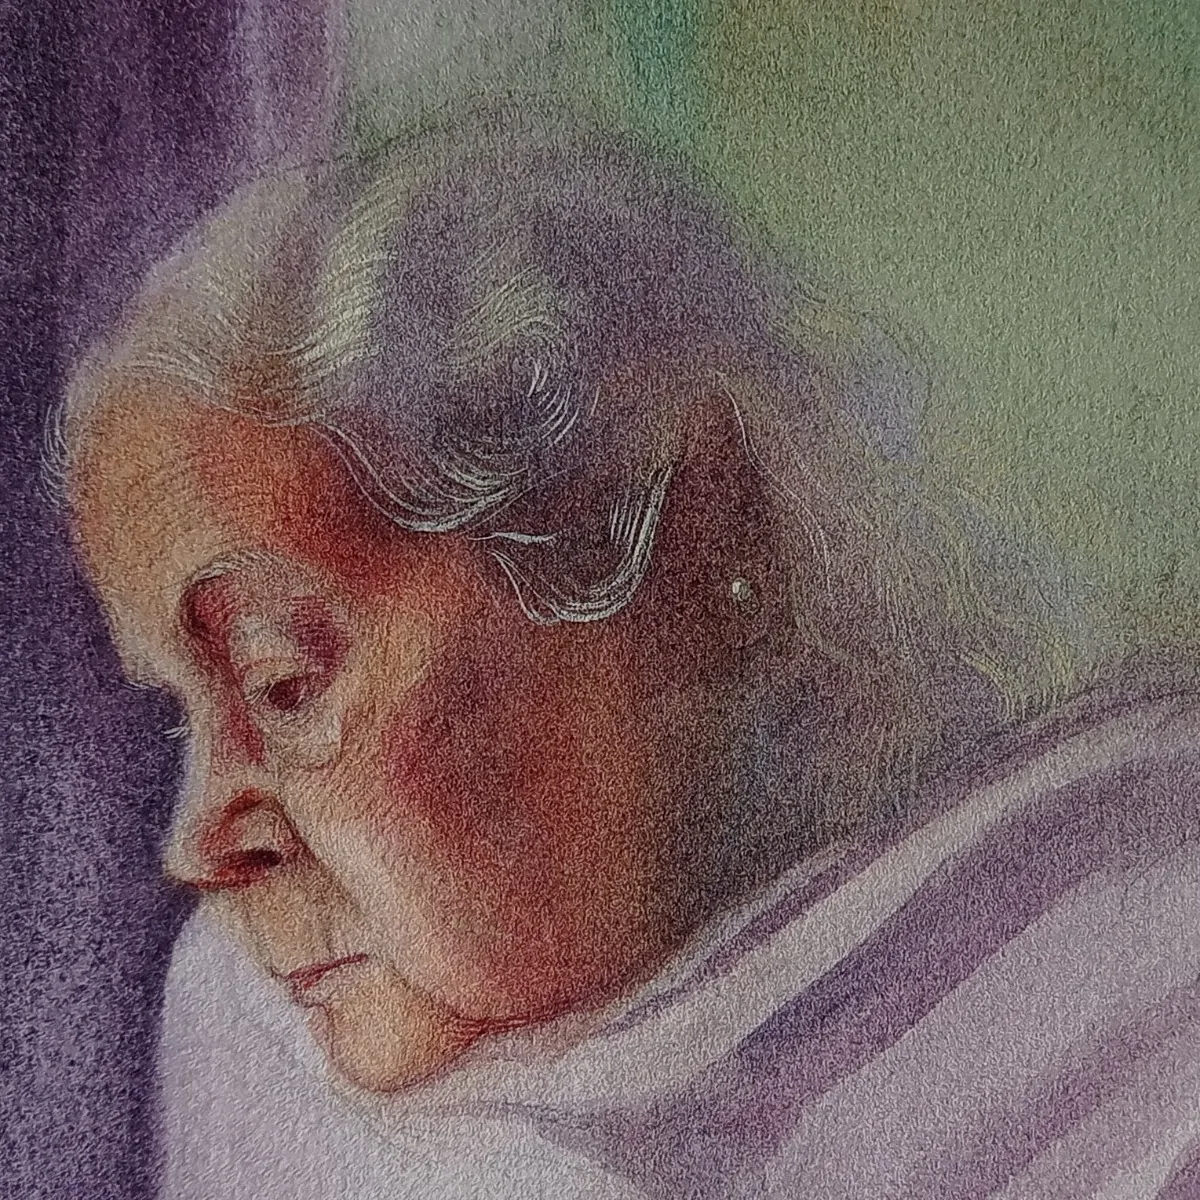 Portrait of my grandmother